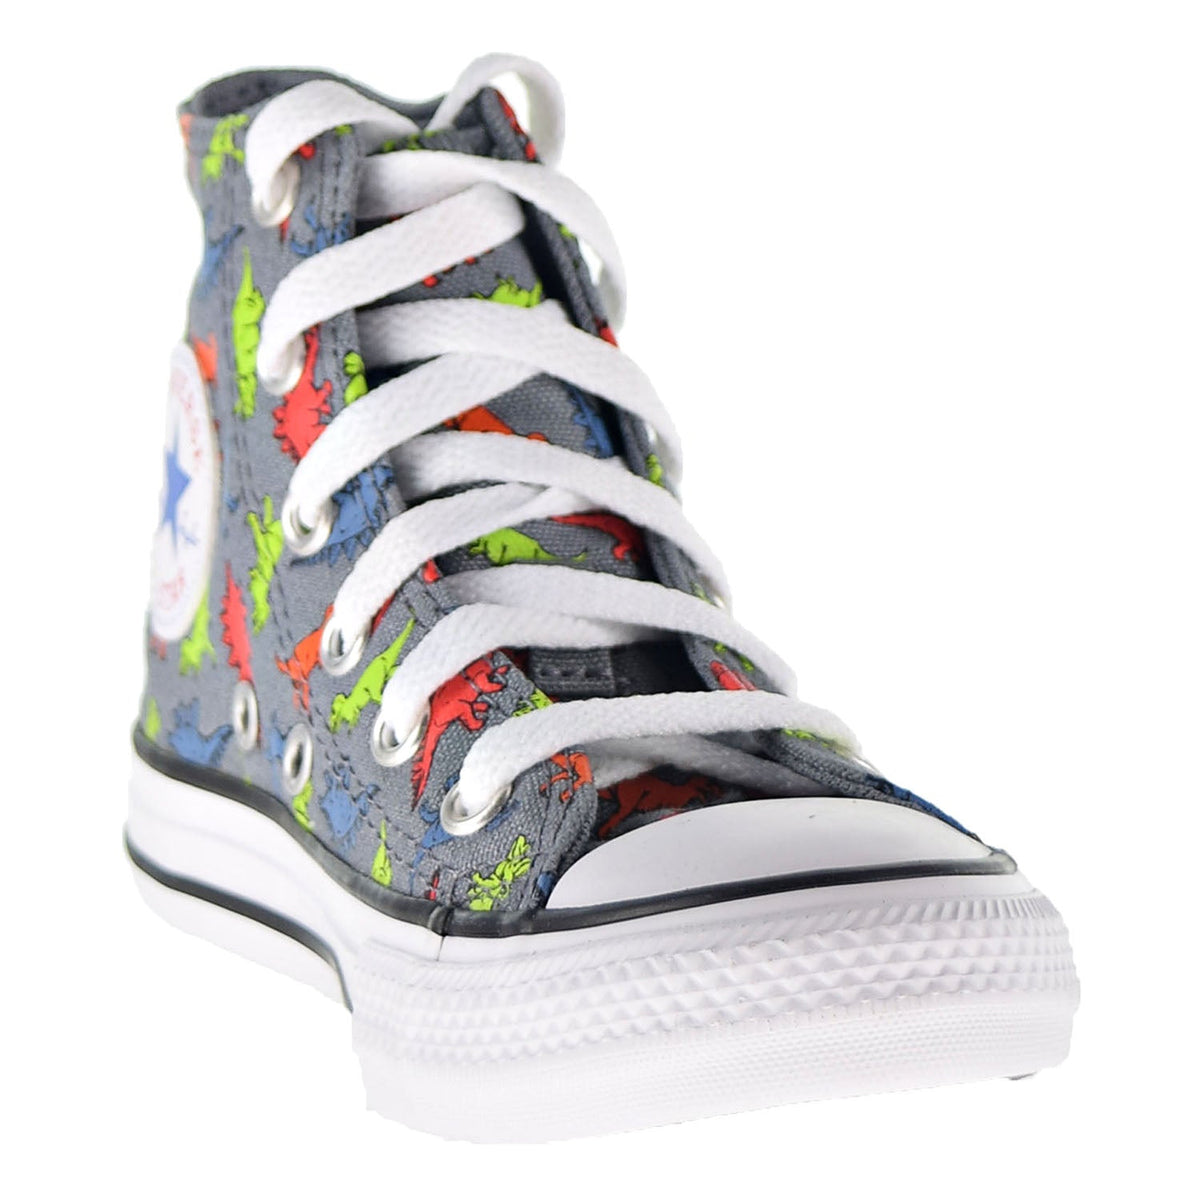 NY Grey-Blac – Converse Plaza Cool Shoes Sports Star All Dinoverse Chuck Hi Kids\' Taylor